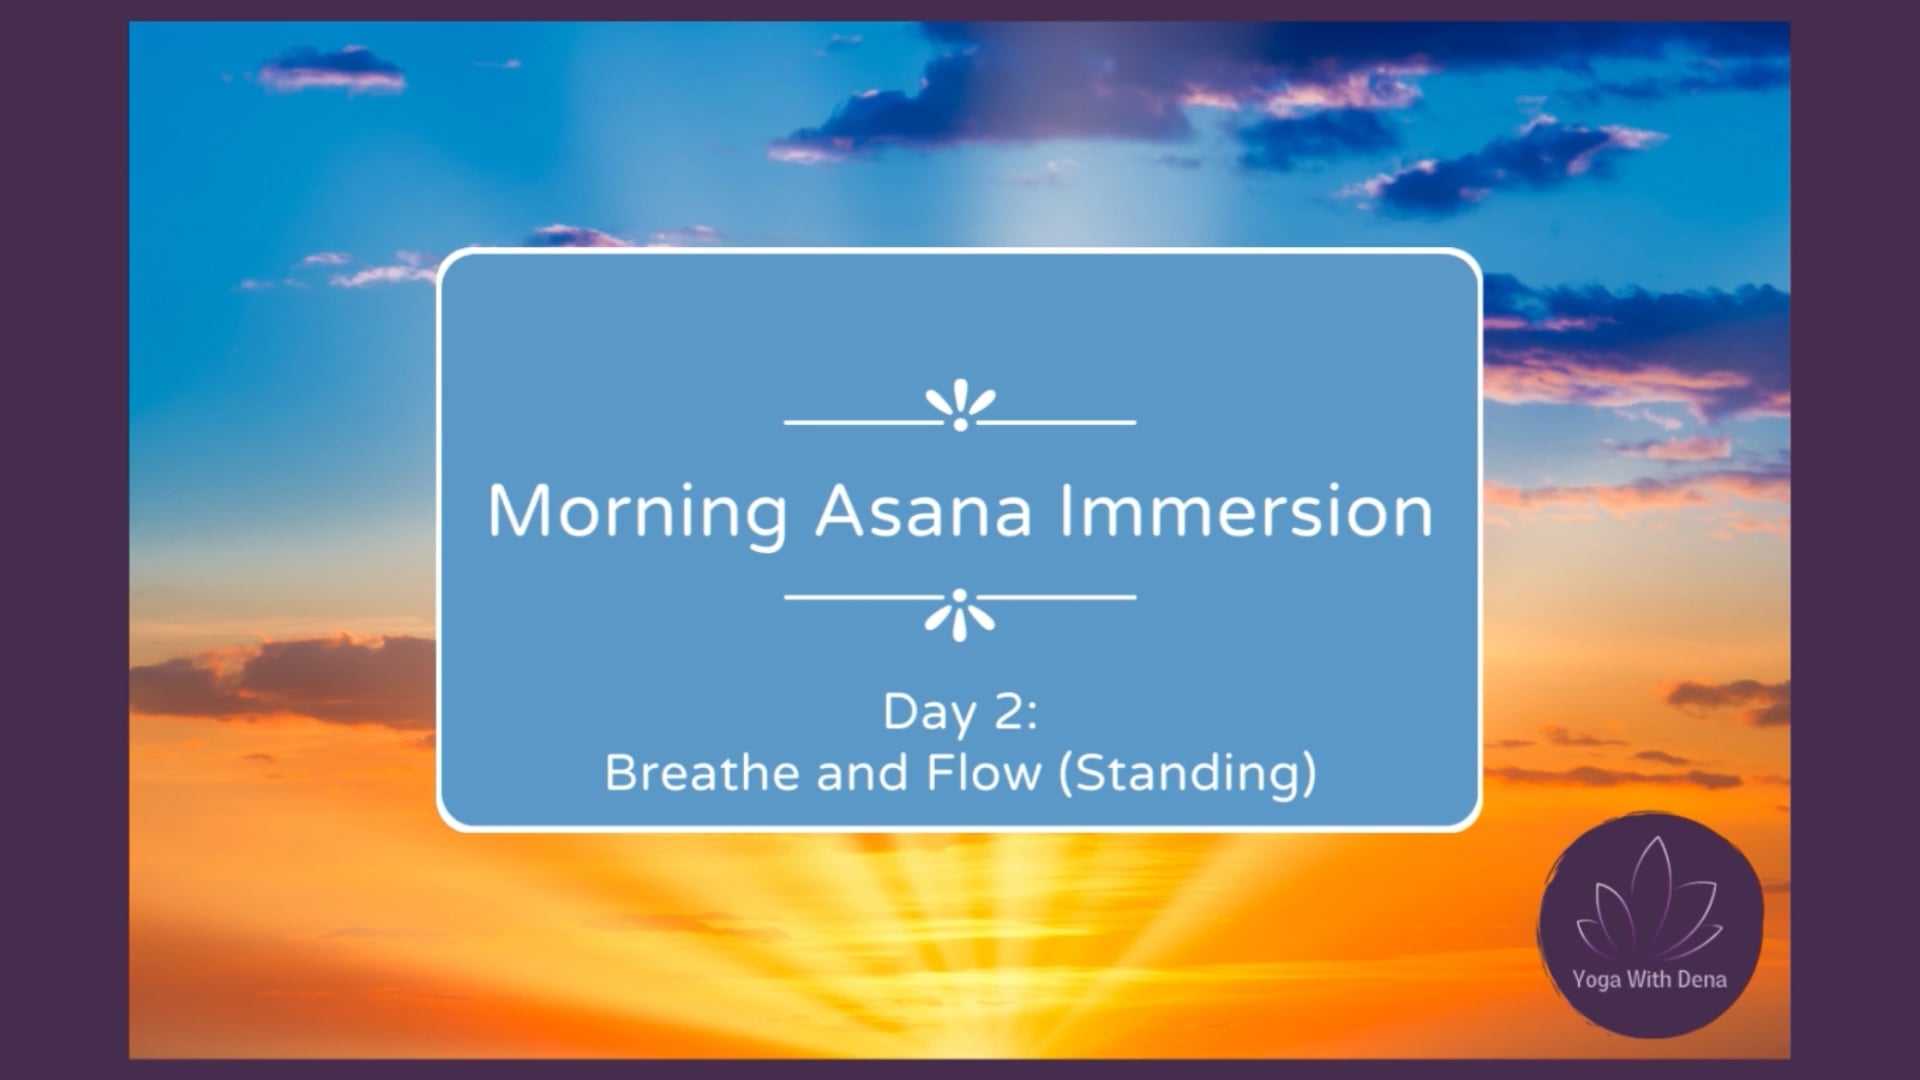 Day 2 - Morning Asana Immersion